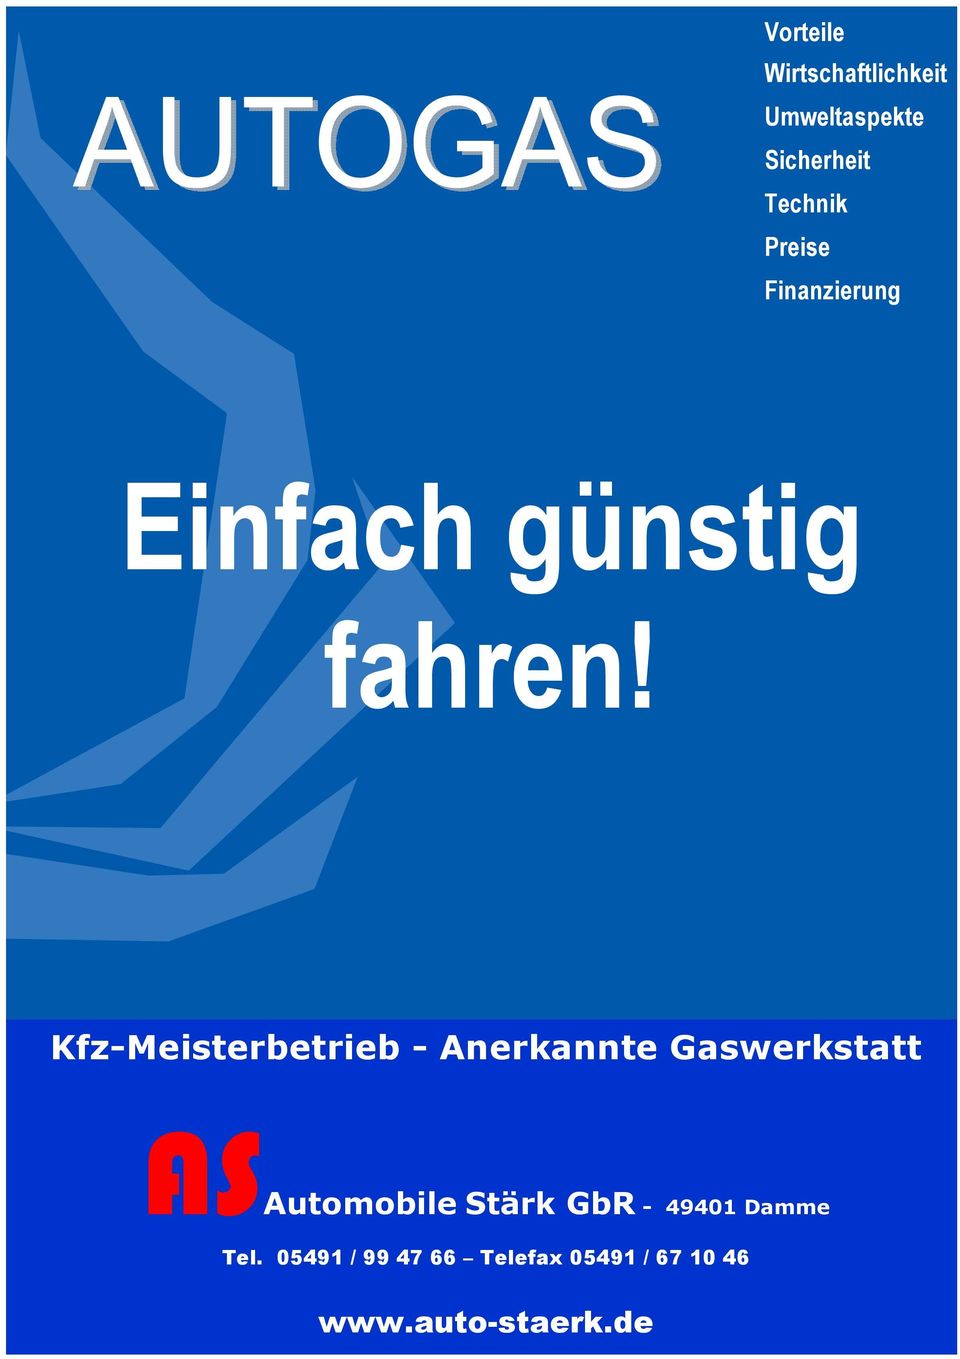 Kfz-Meisterbetrieb - Anerkannte Gaswerkstatt ASAutomobile Stärk